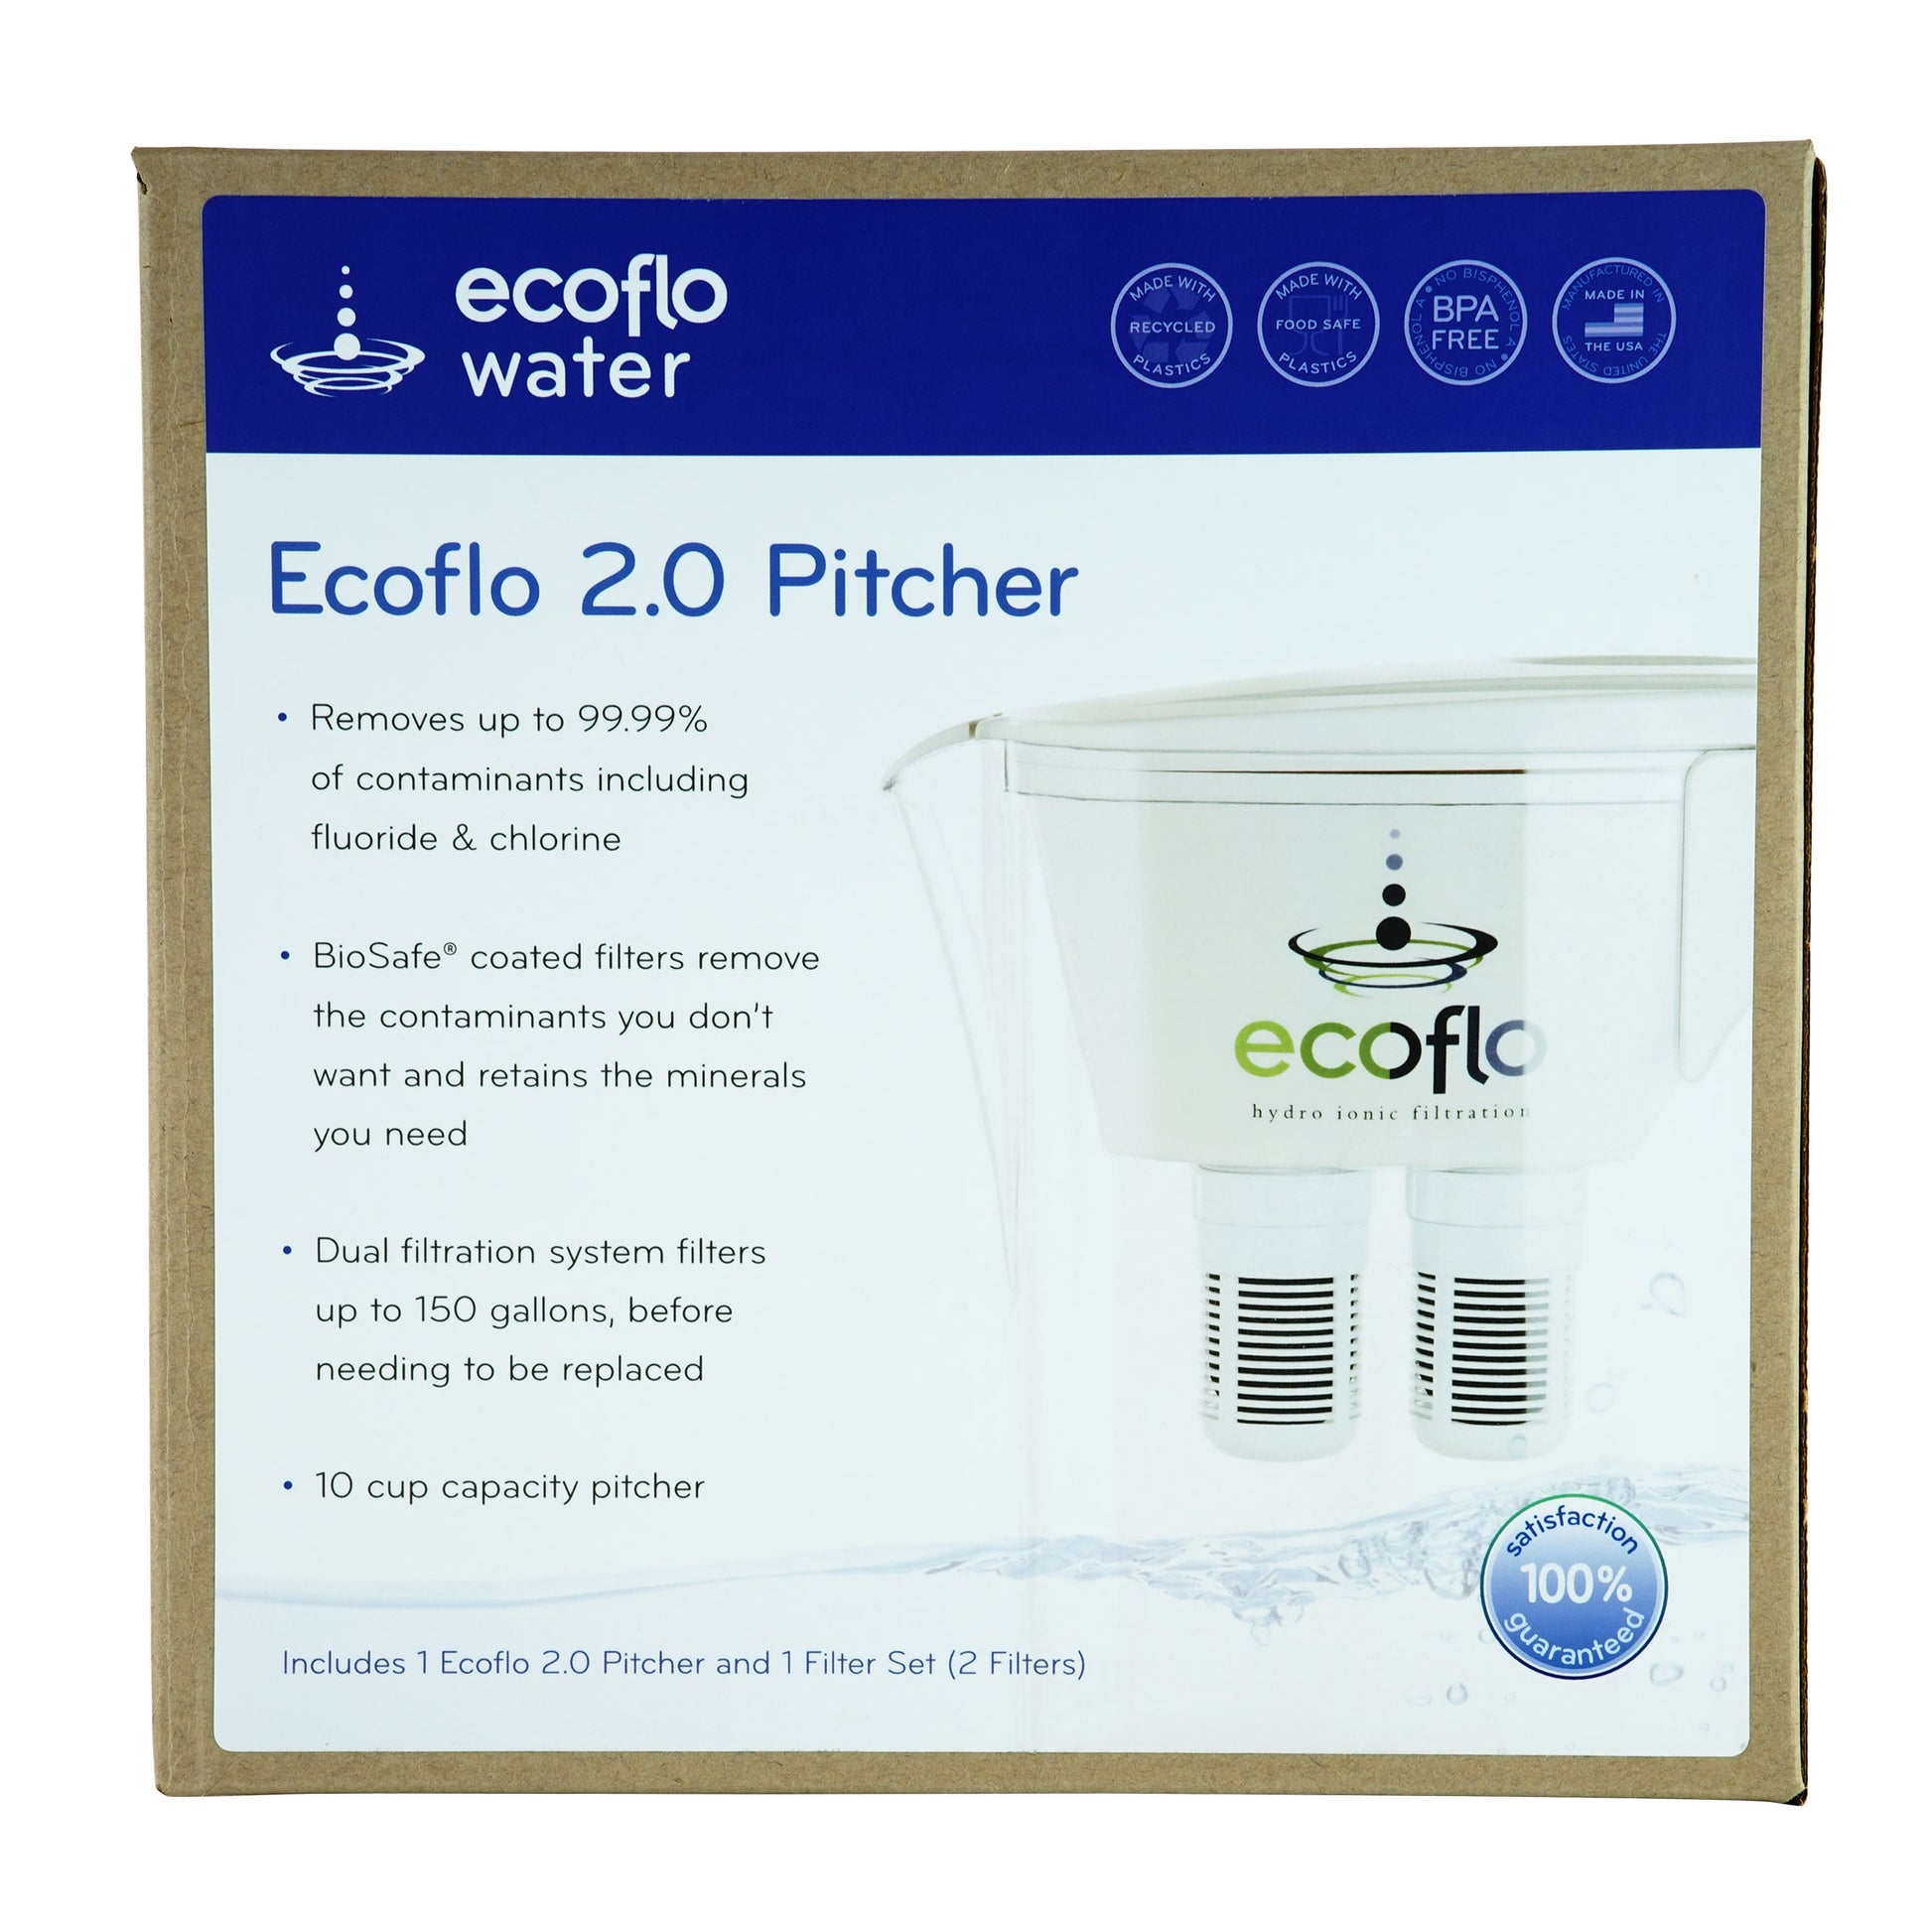 Ecoflo 2.0 Pitcher , Brand_Ecoflo Water Form_Pitcher Size_1 Count